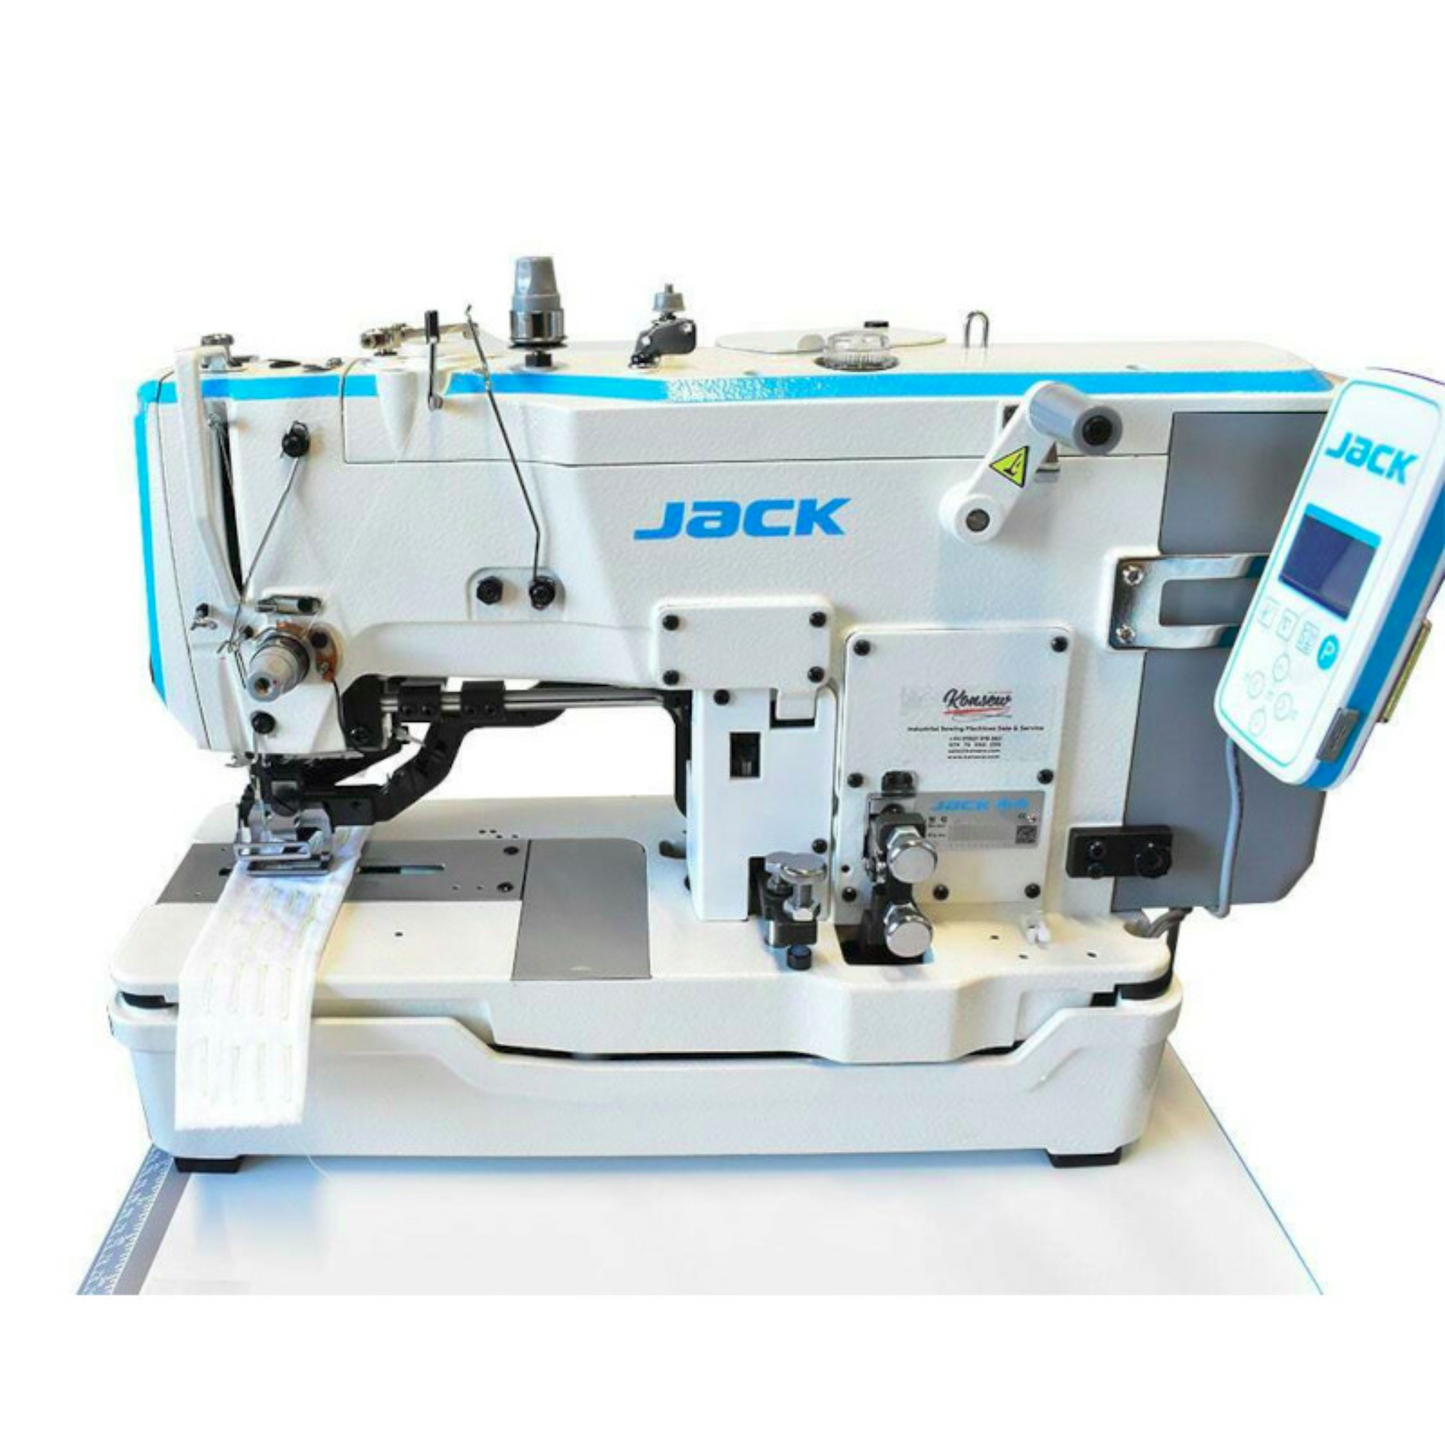 Jack JK-T781G-Z - Sewing machine - White - Front view